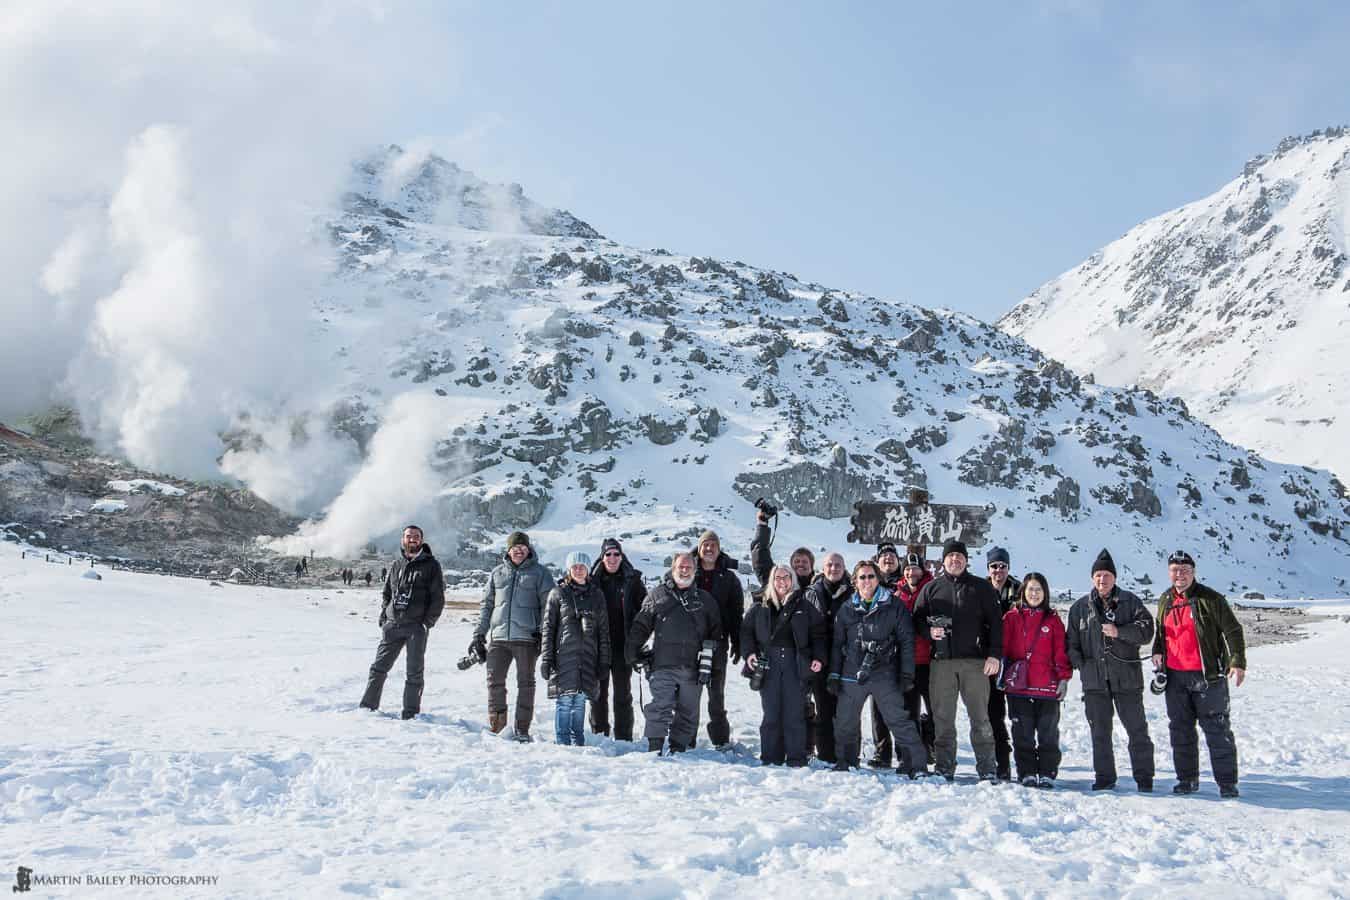 Snow Monkeys & Hokkaido 2013 Tour #1 in Brief (Podcast 360)